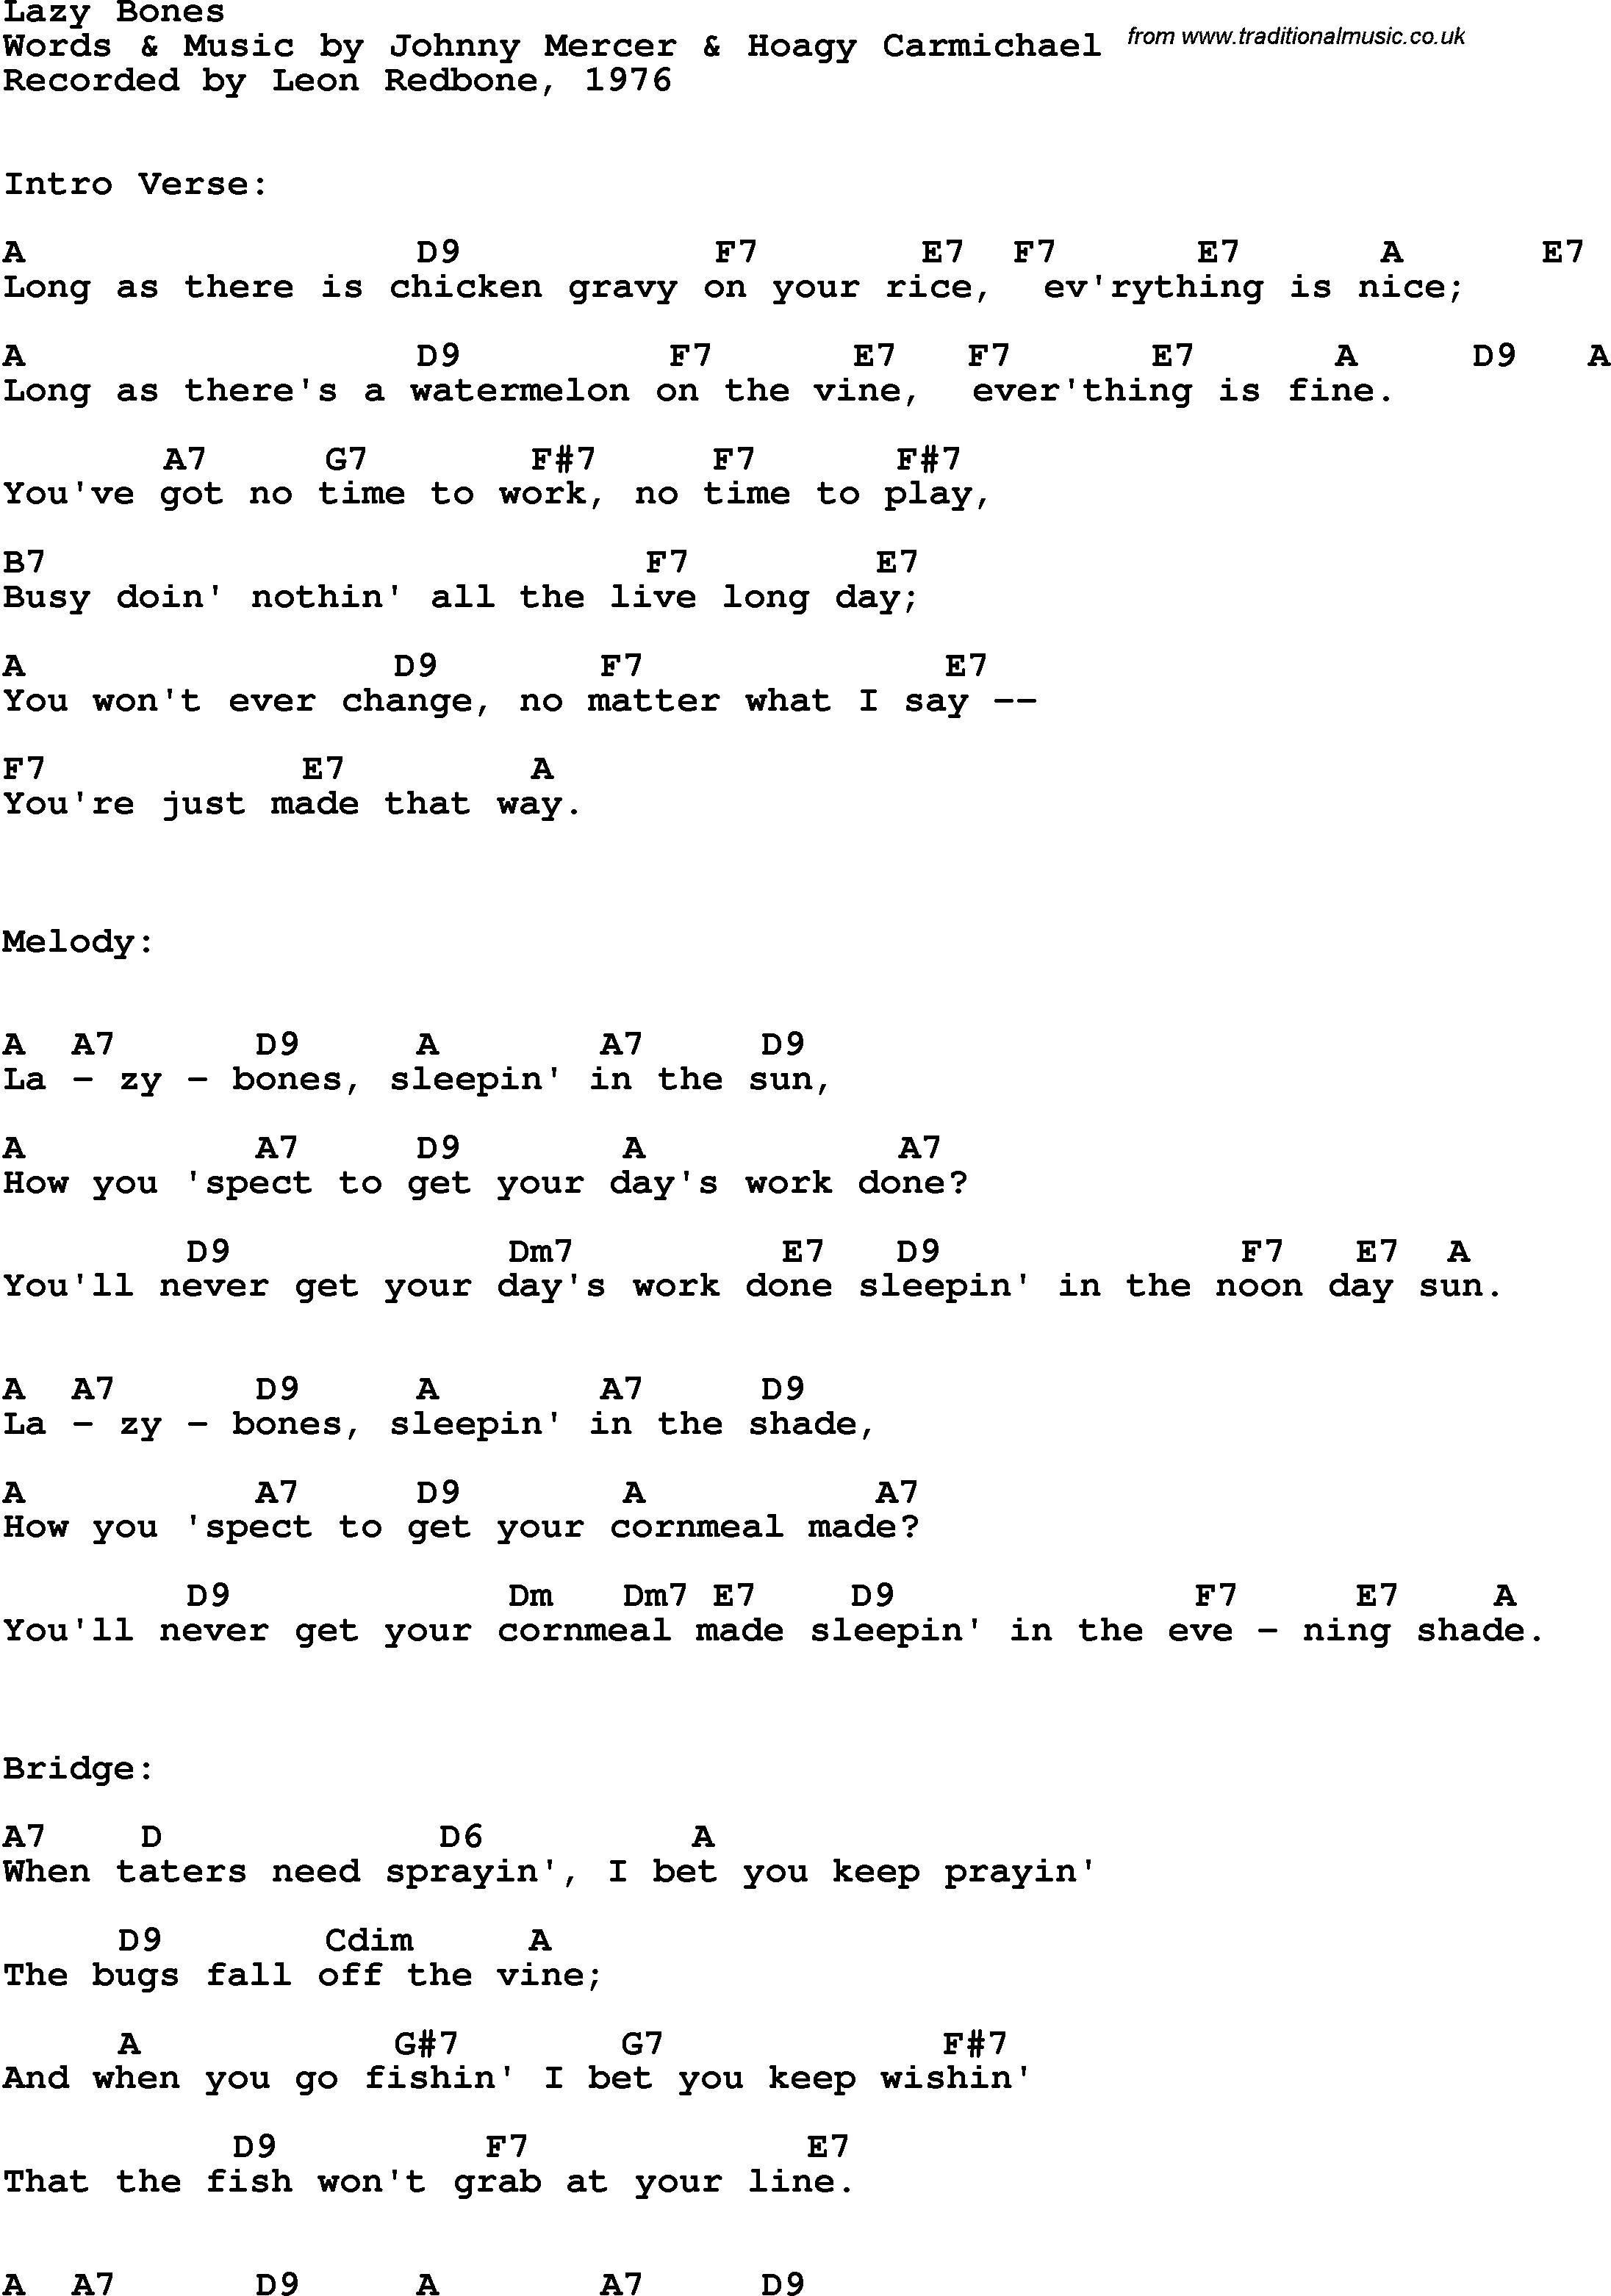 Song Lyrics with guitar chords for Lazy Bones - Leon Redbone, 1976